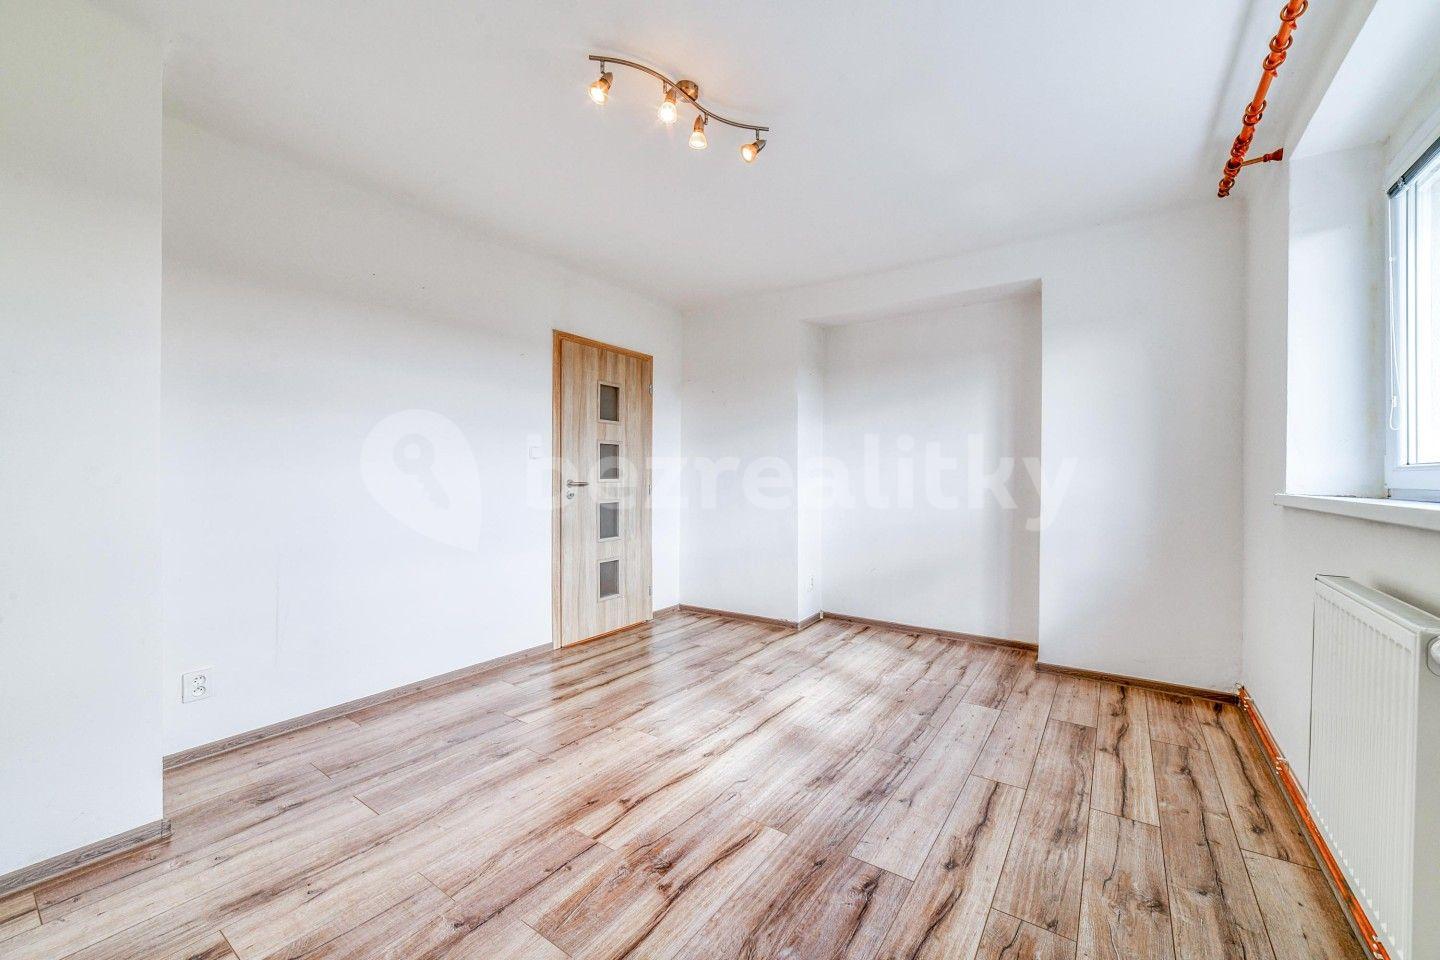 Predaj bytu 3-izbový 63 m², Ke Kasárnům, Mariánské Lázně, Karlovarský kraj